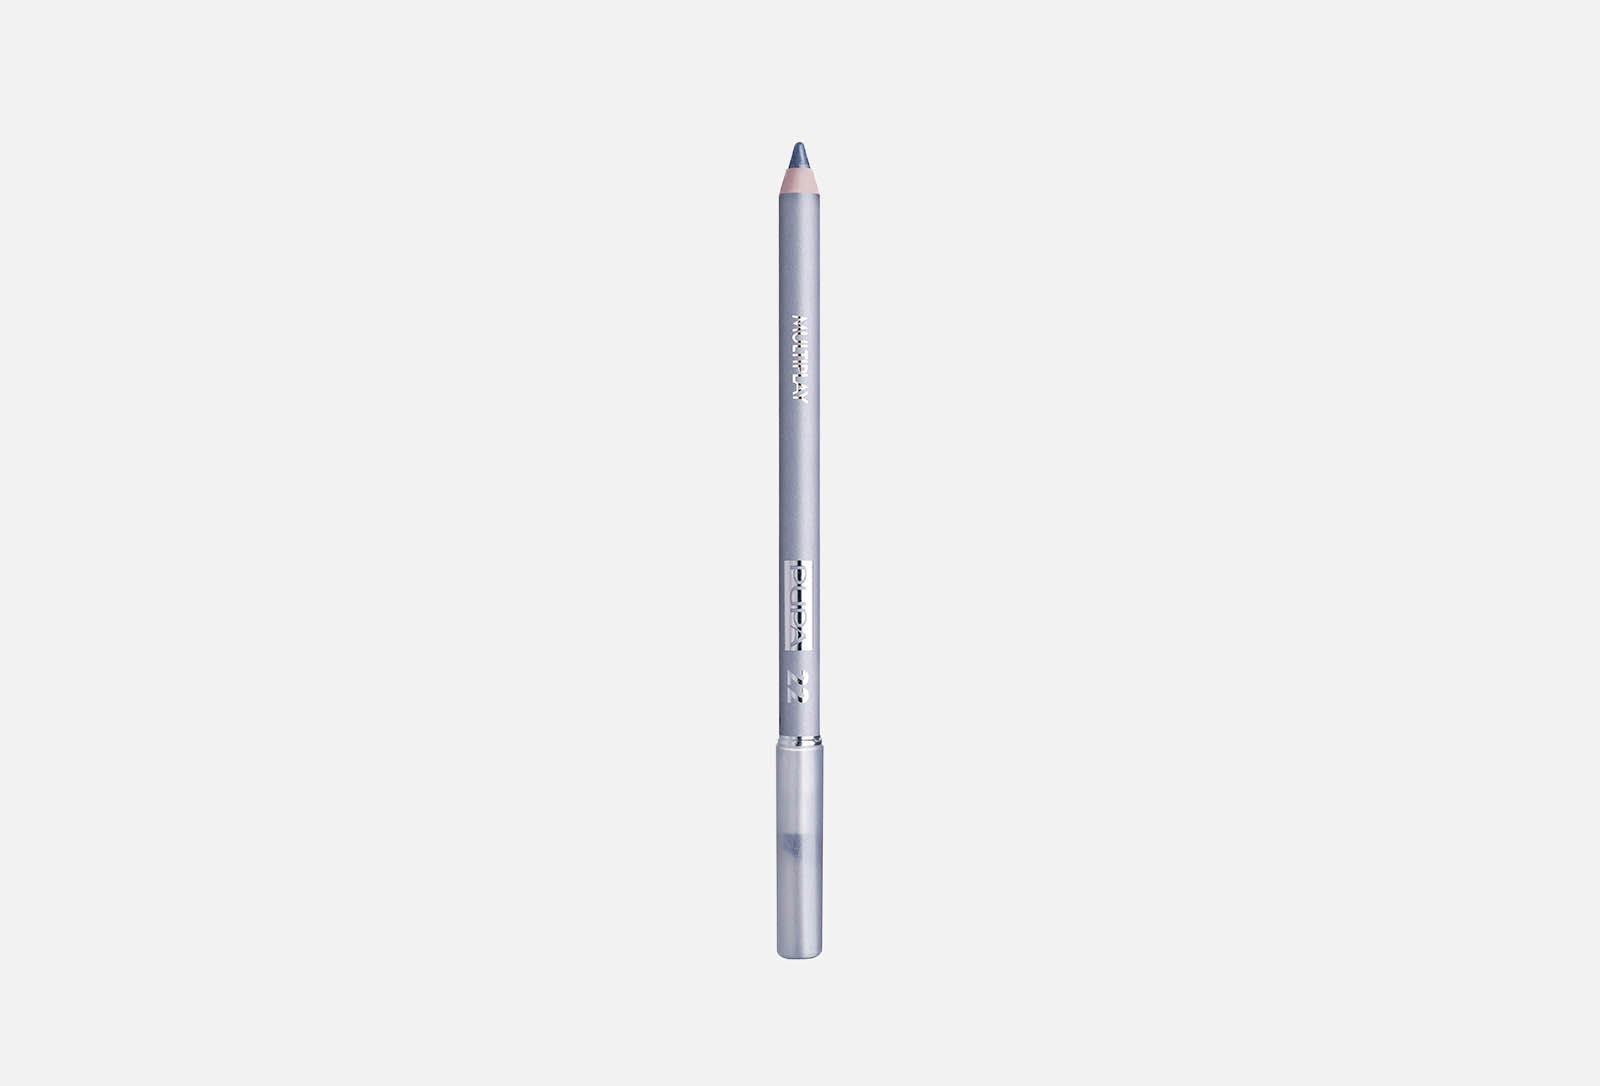 Карандаш для век Pupa Multiplay Eye Pencil. Pupa карандаш для век "Multiplay Eye Pencil" №59. Pupa карандаш для глаз Multiplay 05. Pupa Multiplay карандаш для глаз 22. Серый карандаш купить